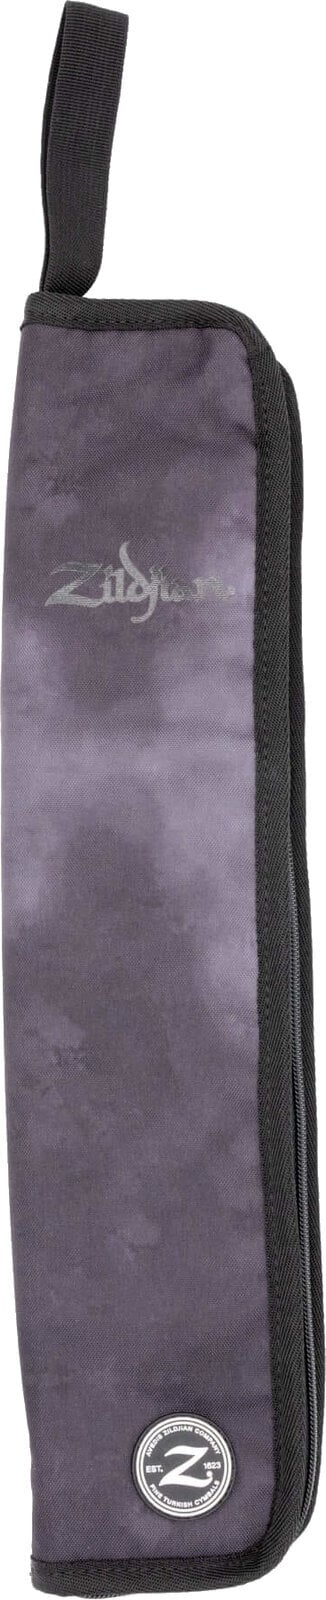 Borsa Bacchette Zildjian Student Mini Stick Bag Black Rain Cloud Borsa Bacchette